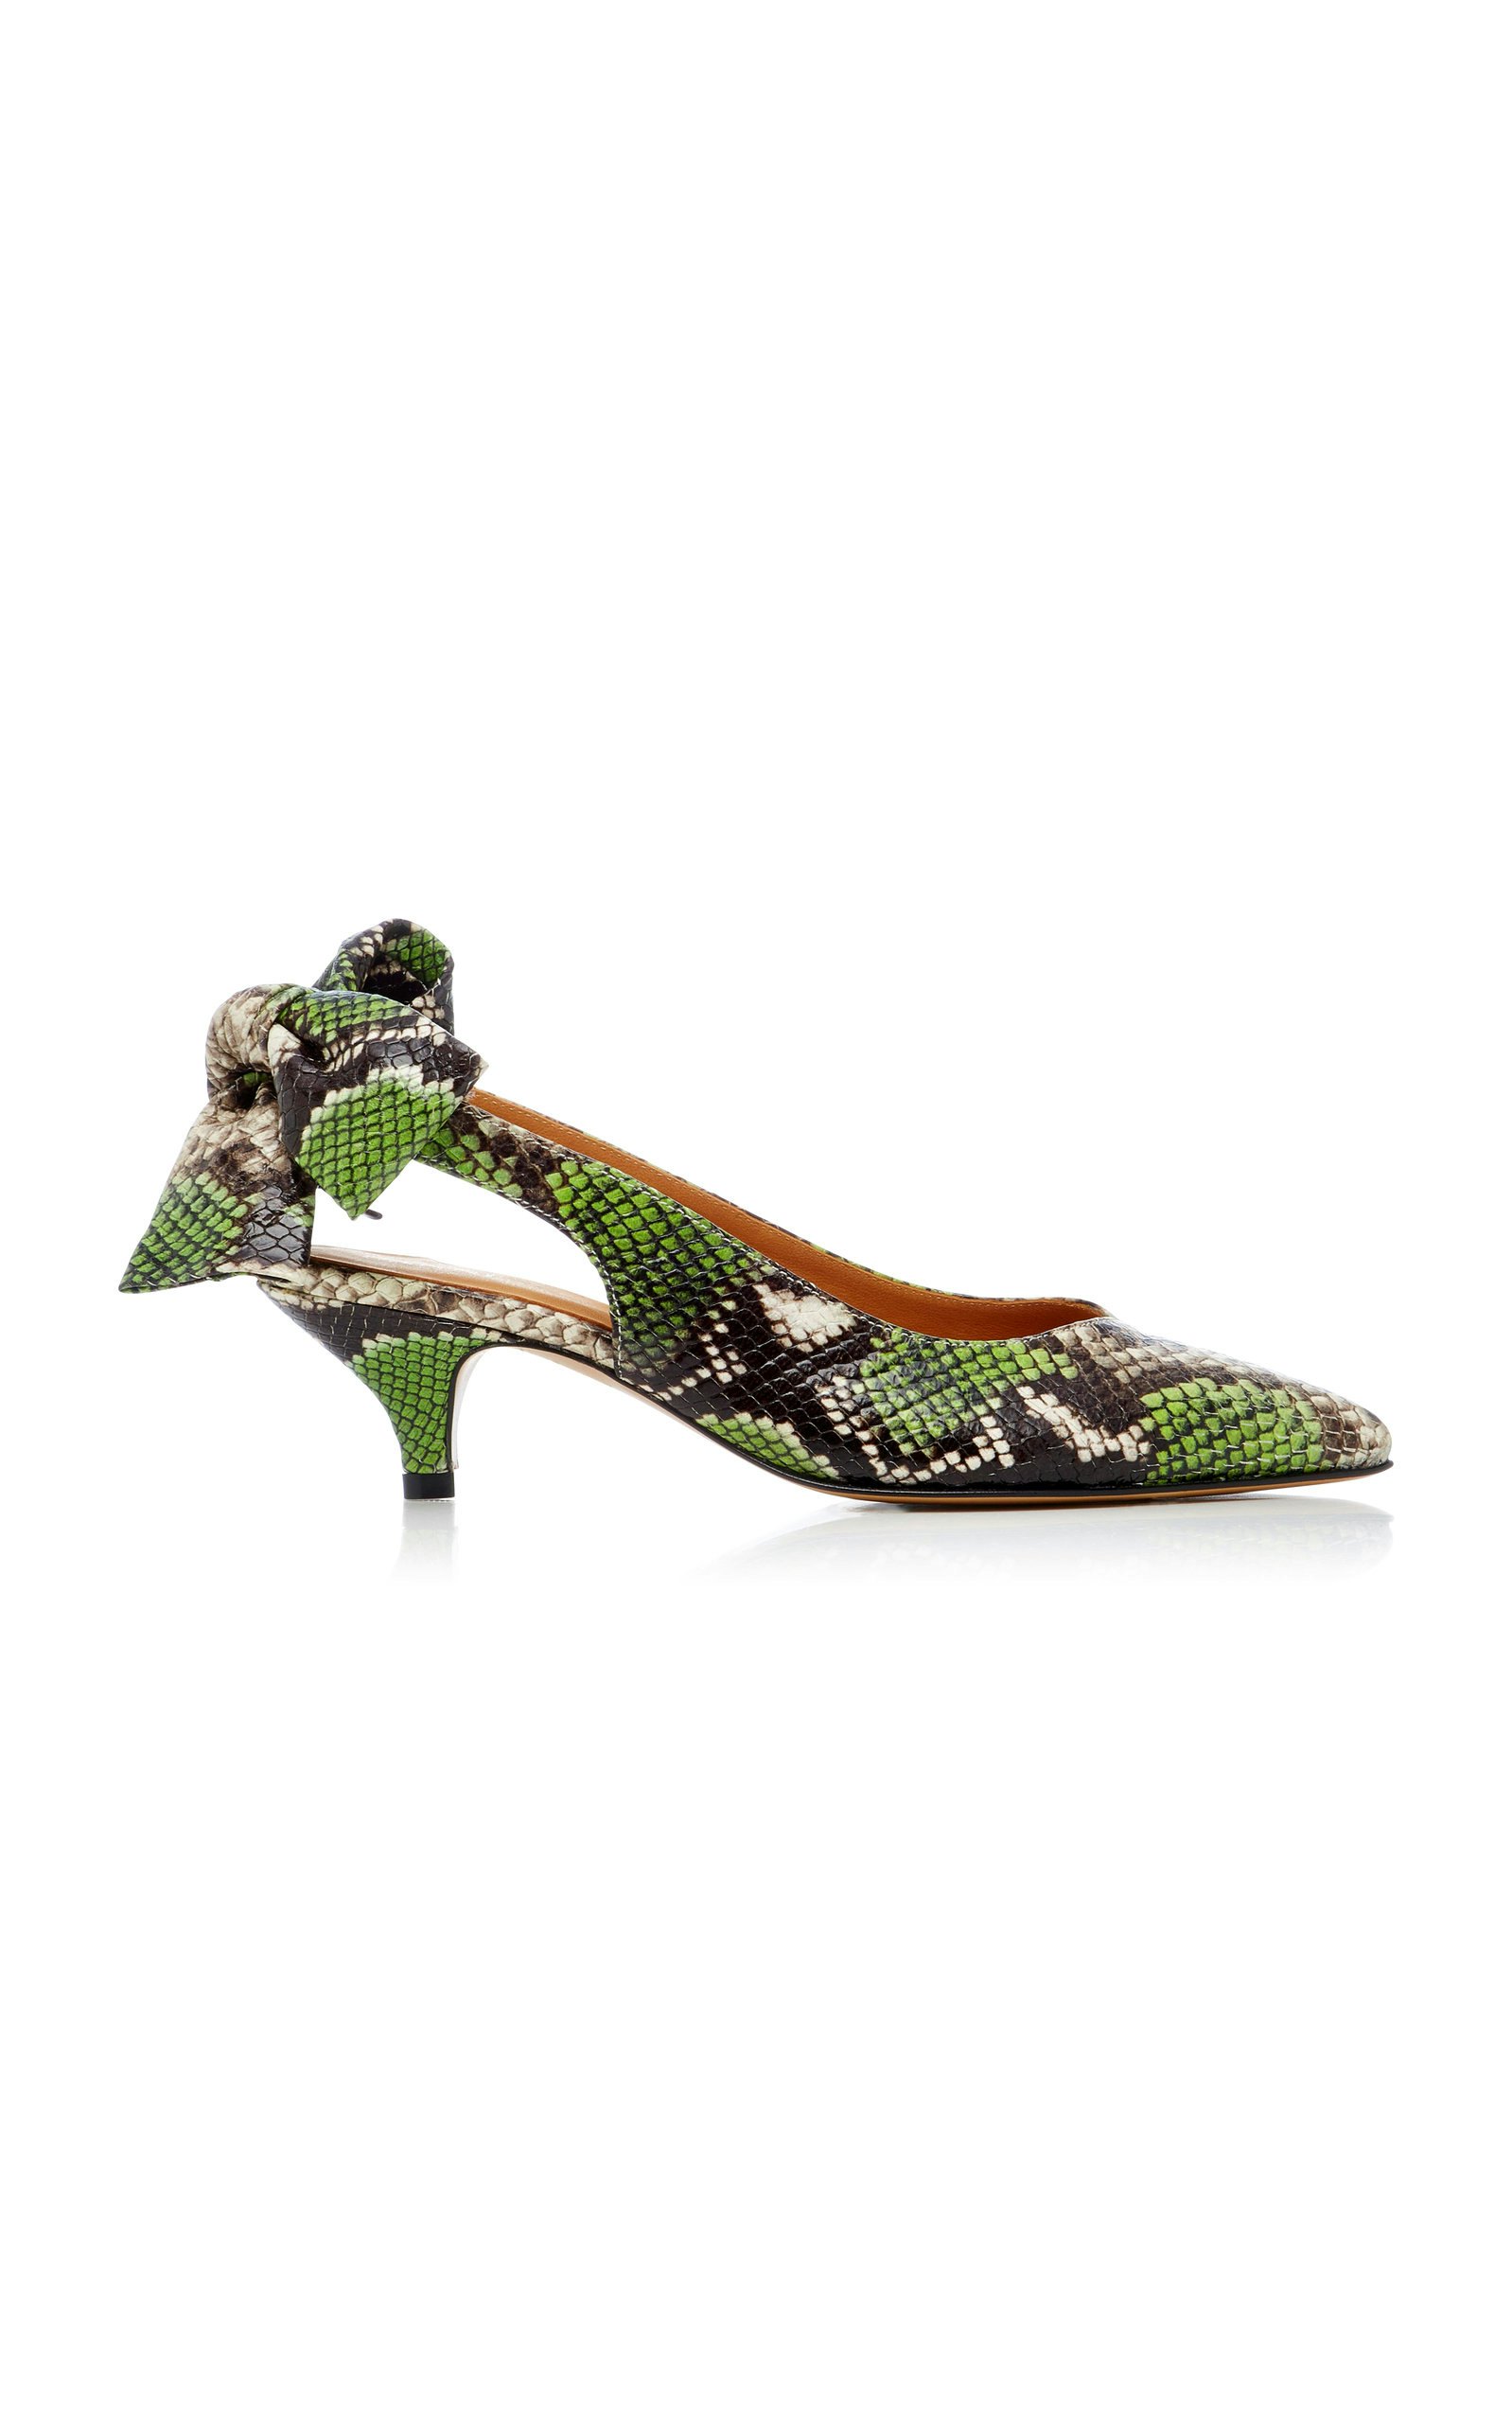 lime green snakeskin heels